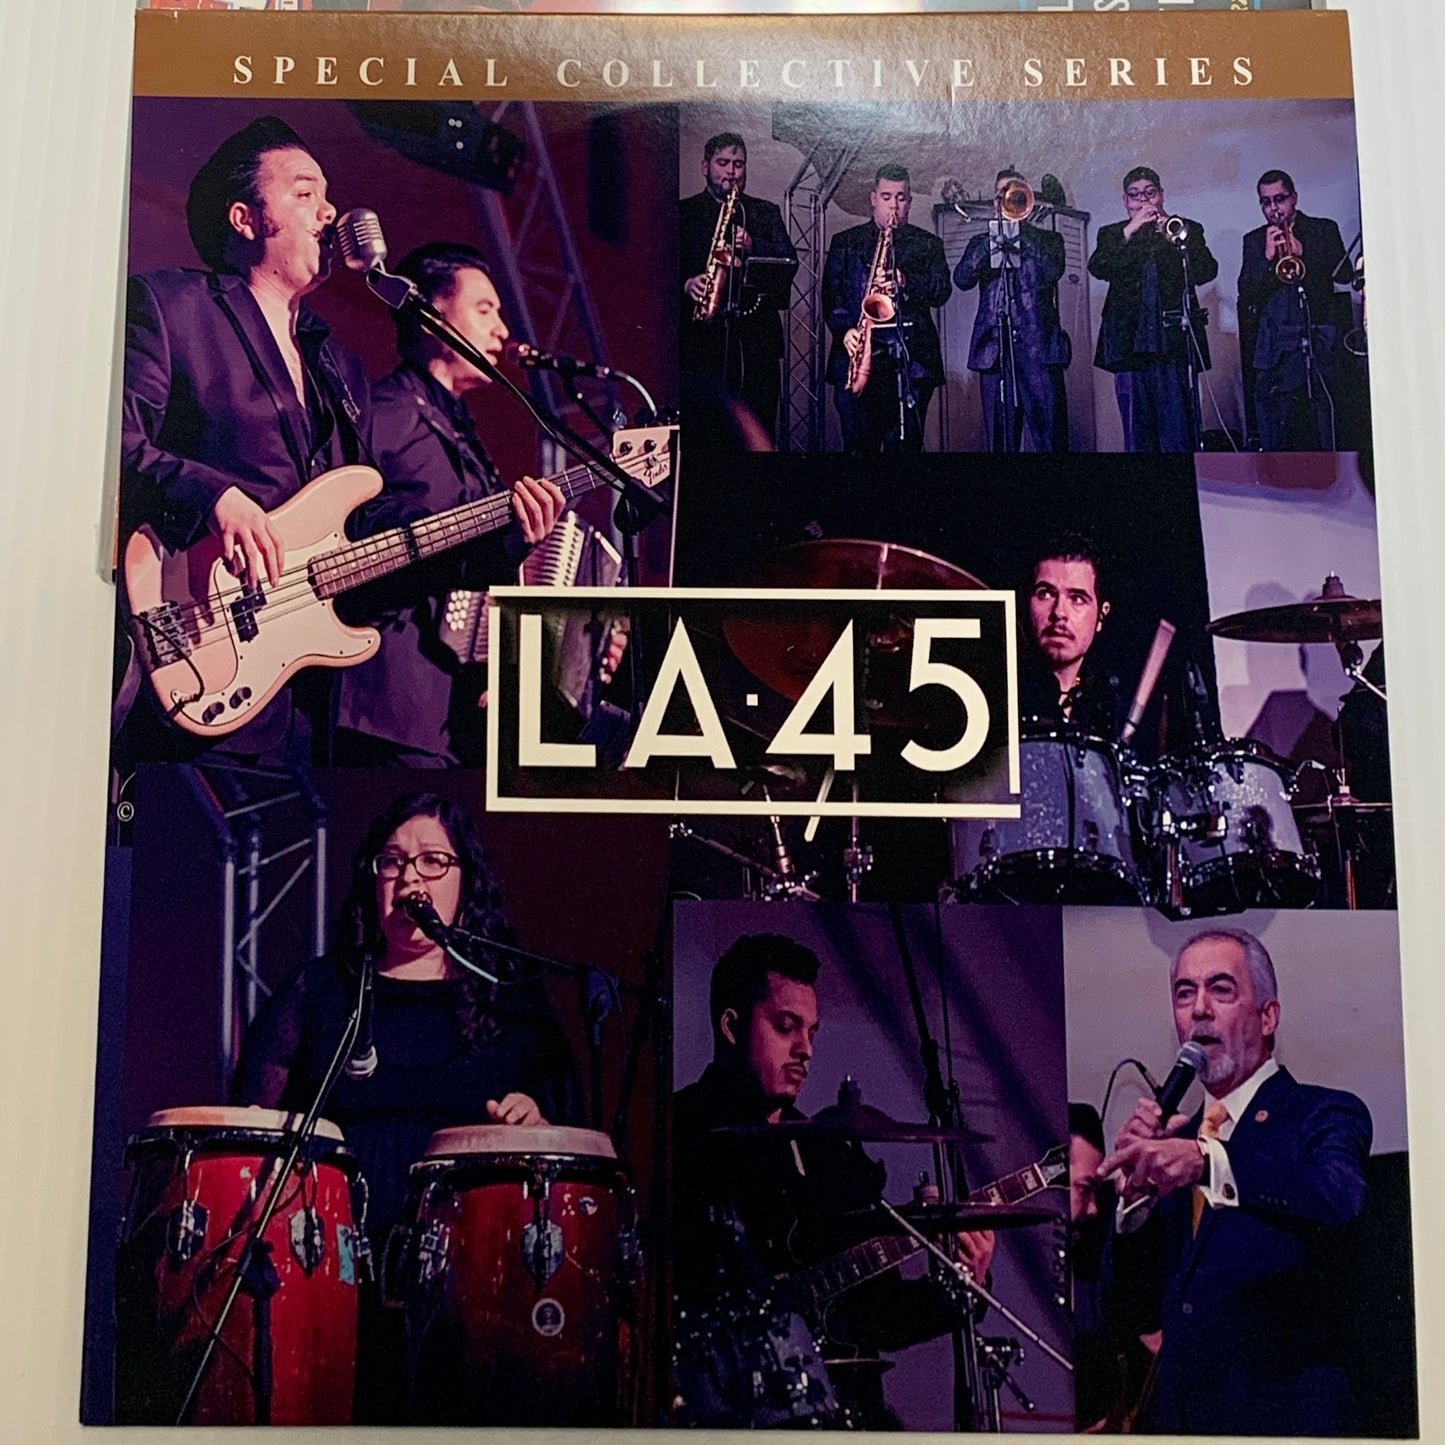 La .45 - Special Collective Series (45RPM)